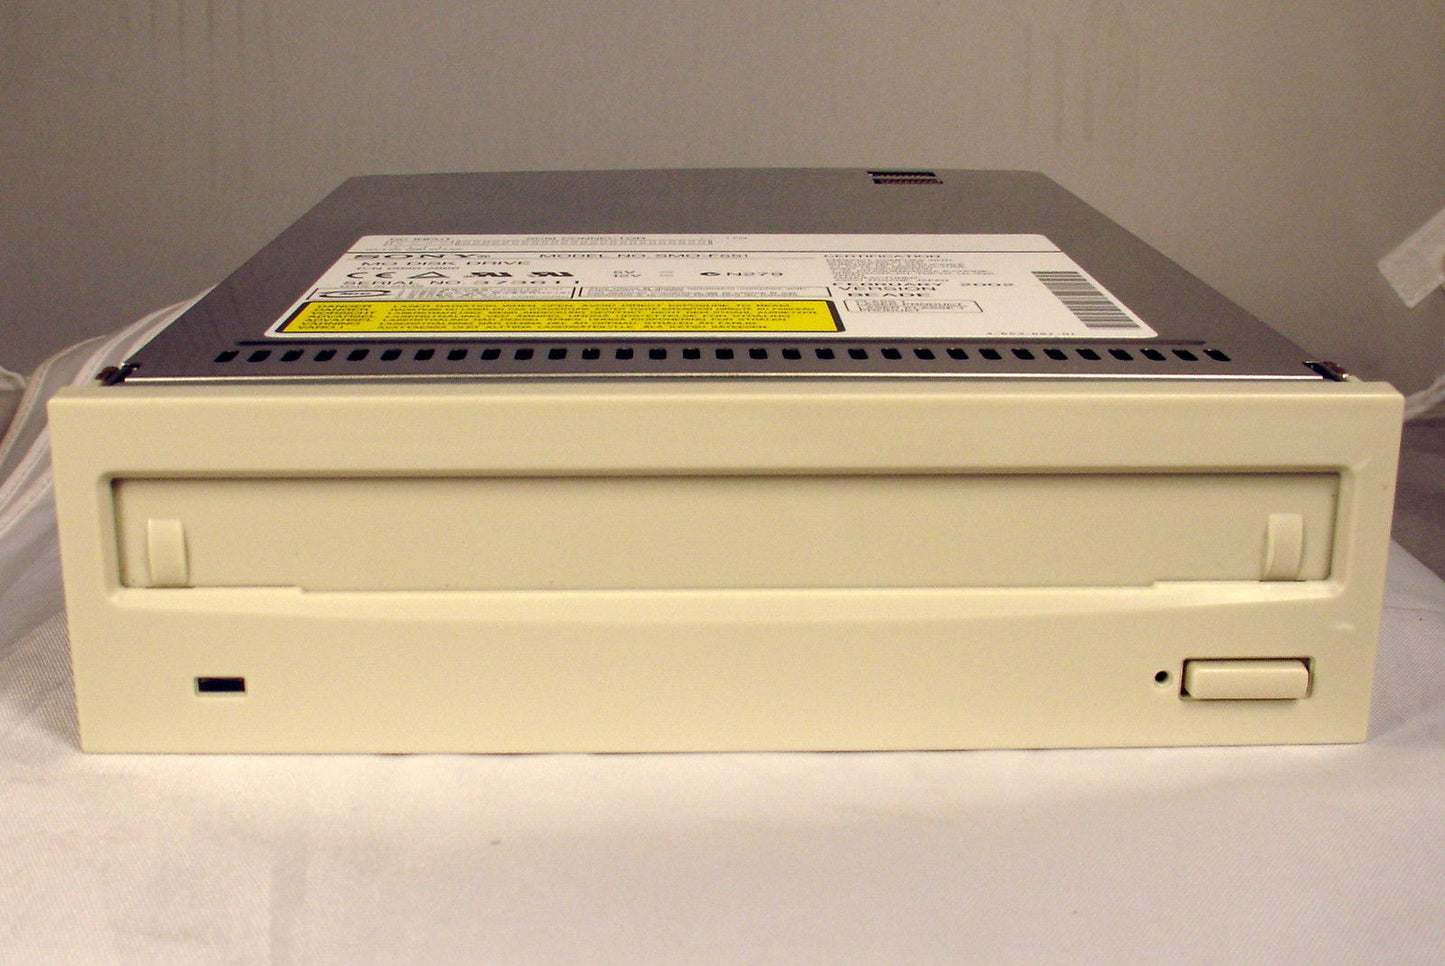 Plasmon MOD520i Internal SCSI MO Drive 5.2GB With NEW Bezel - Micro Technologies (yourdrives.com)